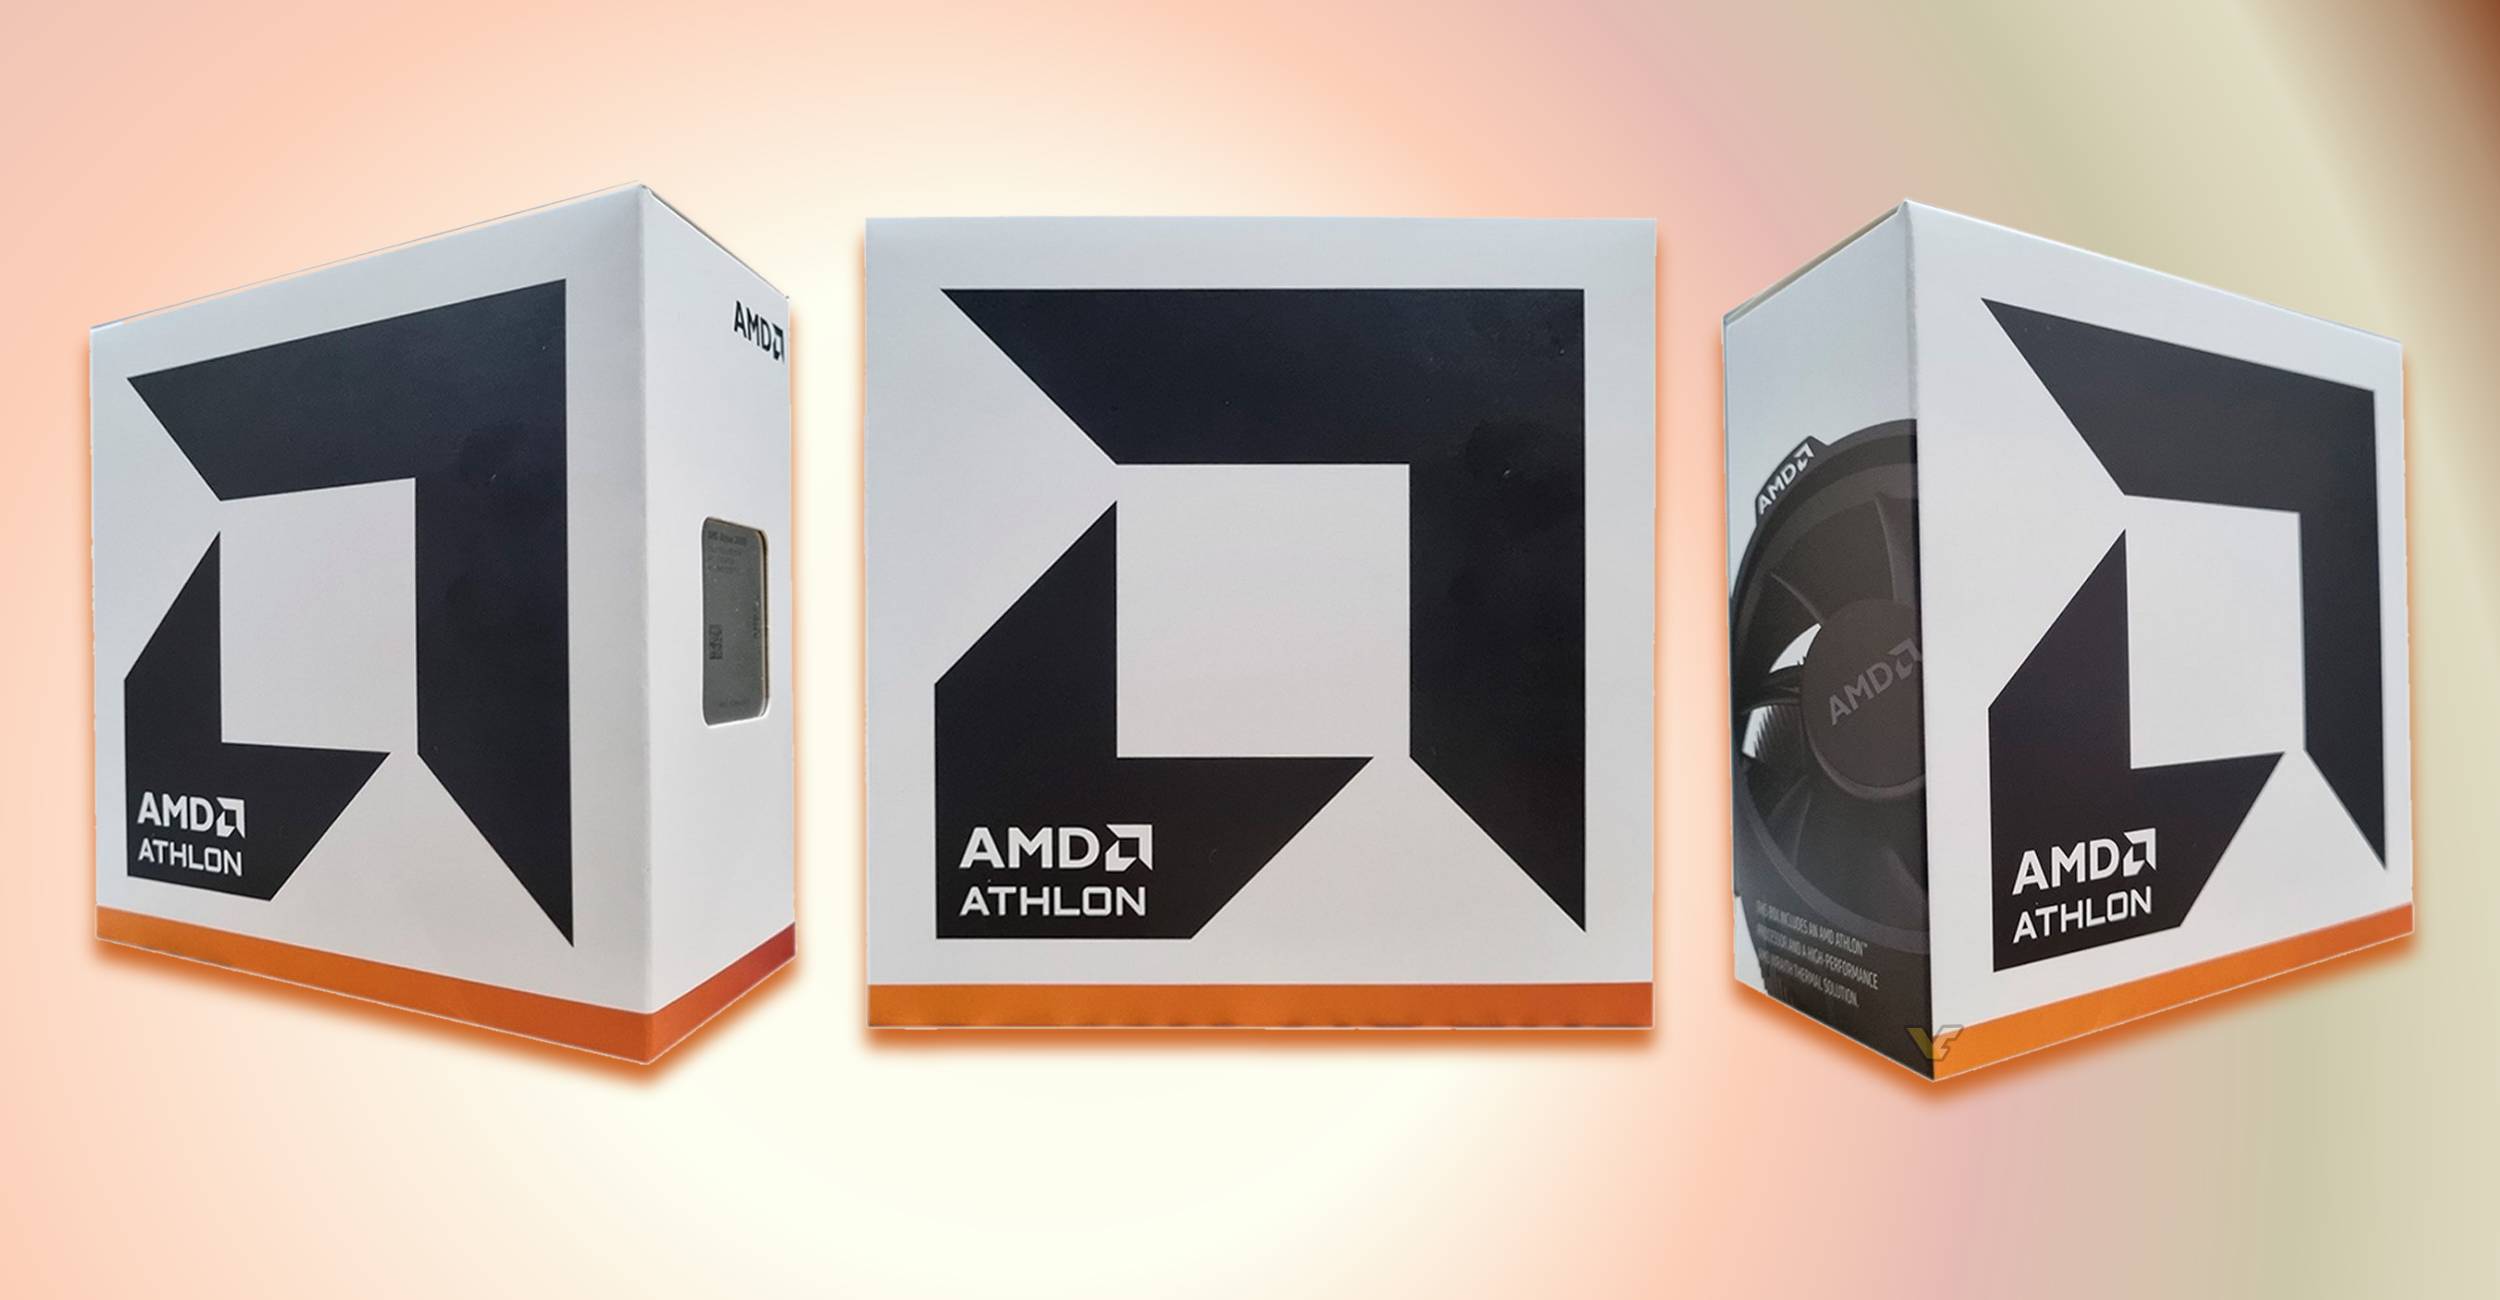 AMD has a new box for its 14nm 2-core Athlon 3000G desktop